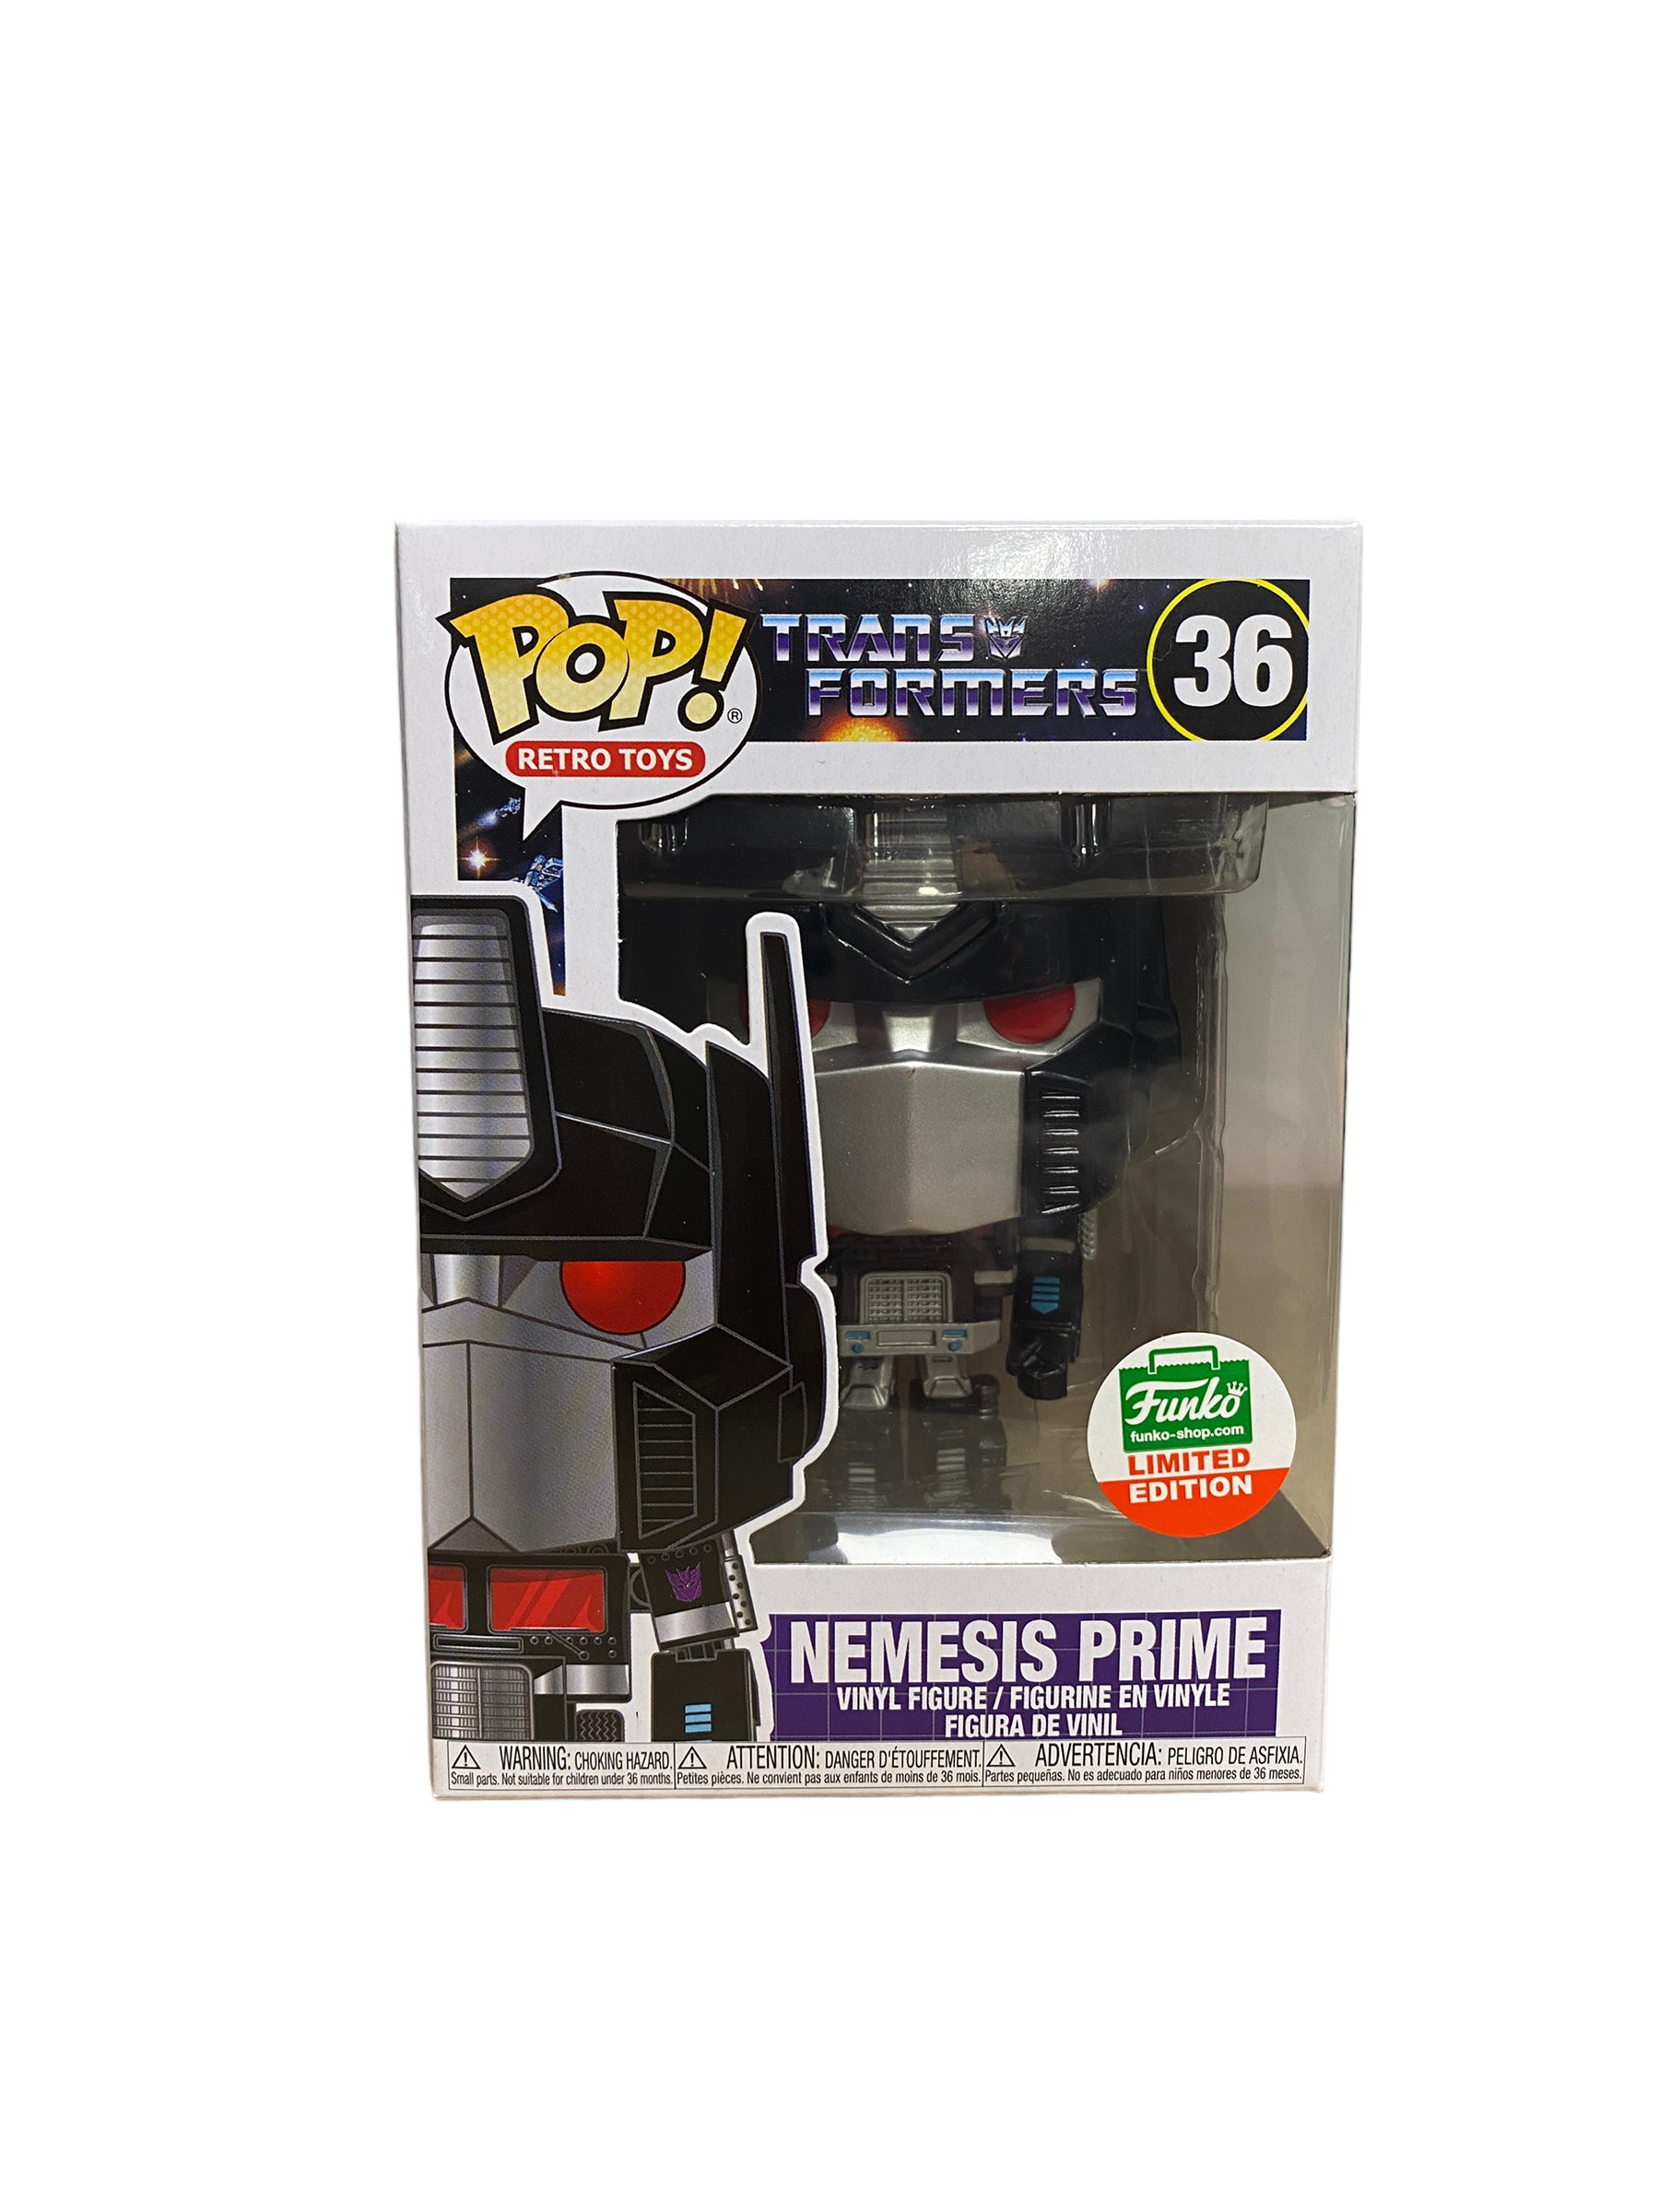 Nemesis Prime #36 Funko Pop! - Transformers - Funko Shop Exclusive - Condition 9.5/10